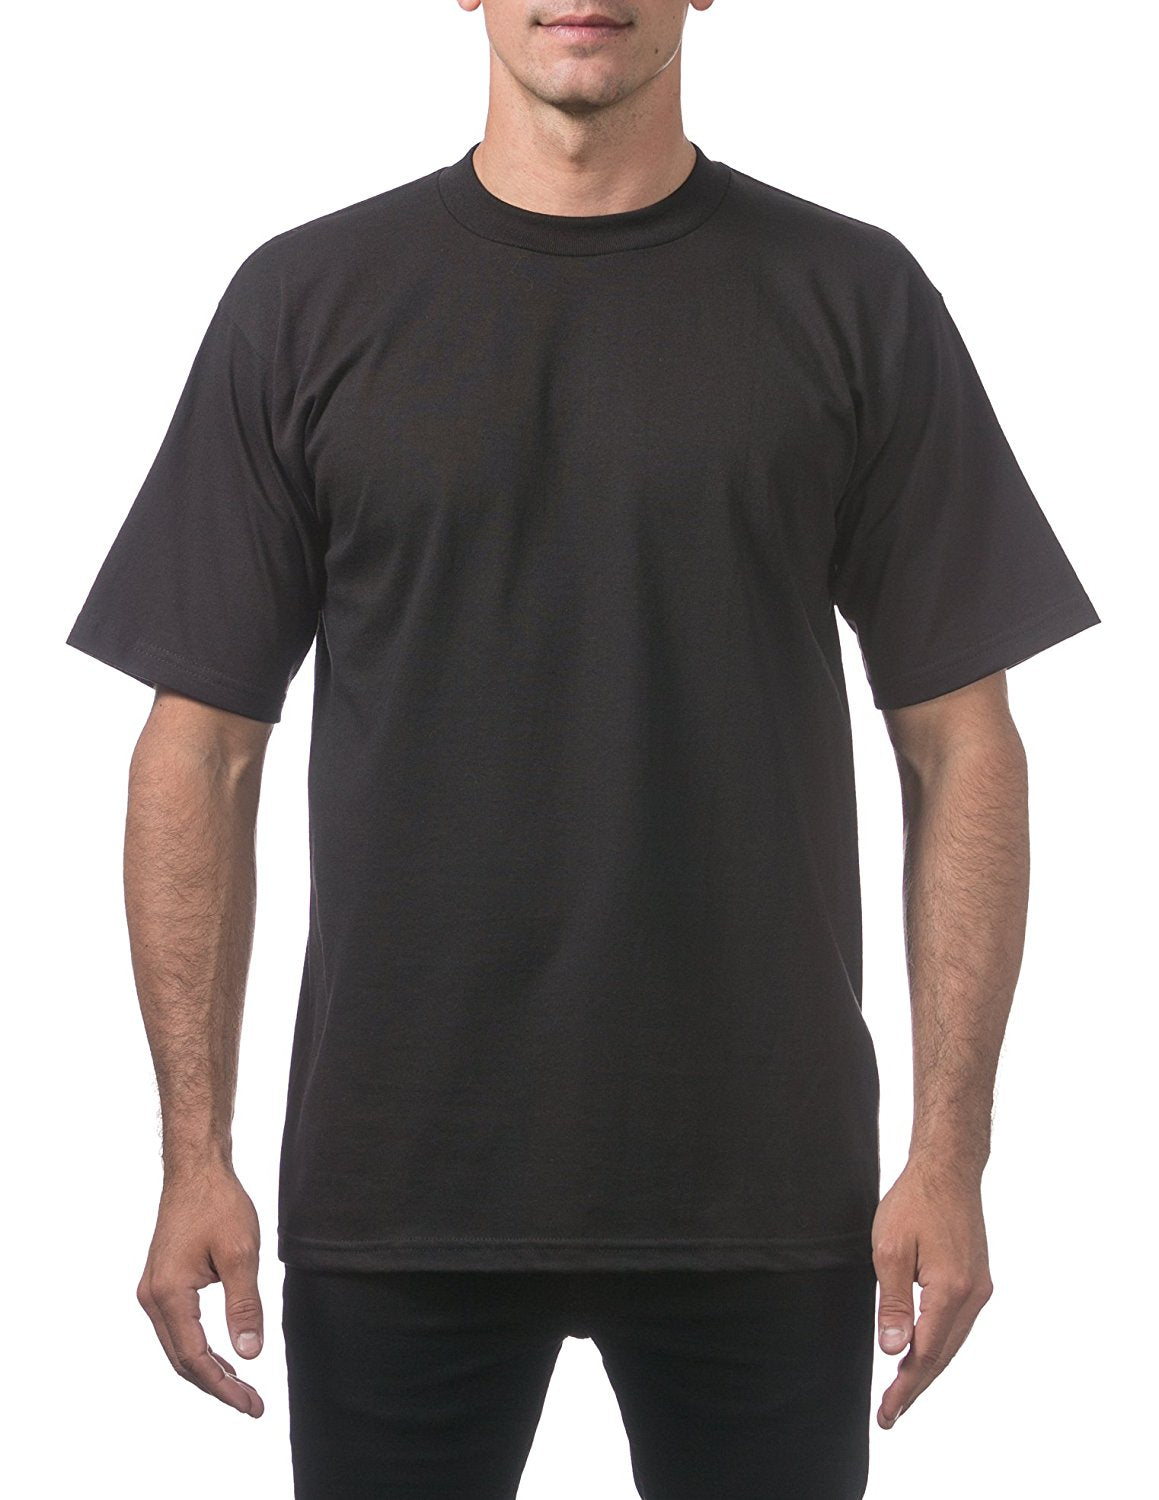 Pro Club Men's Heavyweight Cotton Short Sleeve Crew Neck T-Shirt Black